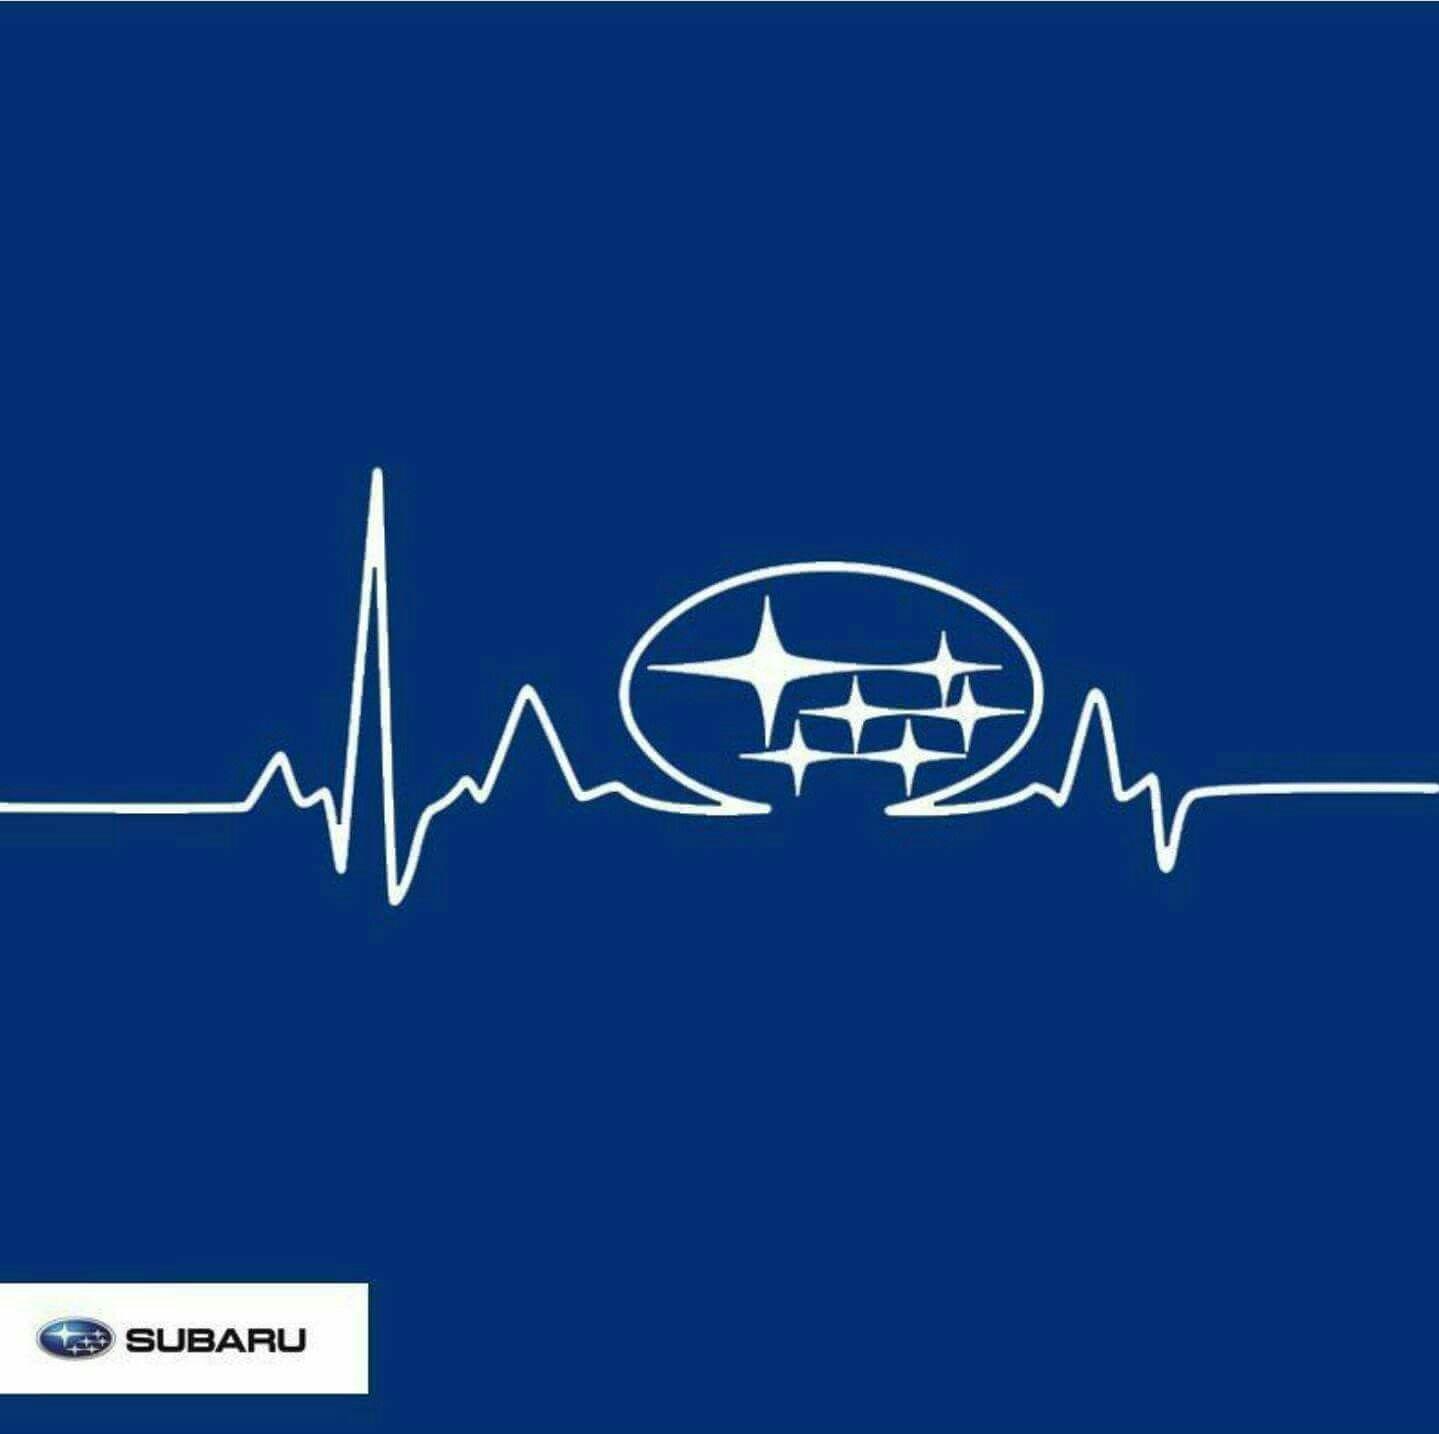 Subaru Impreza WRX Logo - Pin by Karen Thorpe on Logos/wallpaper, ect | Subaru, Subaru wrx ...